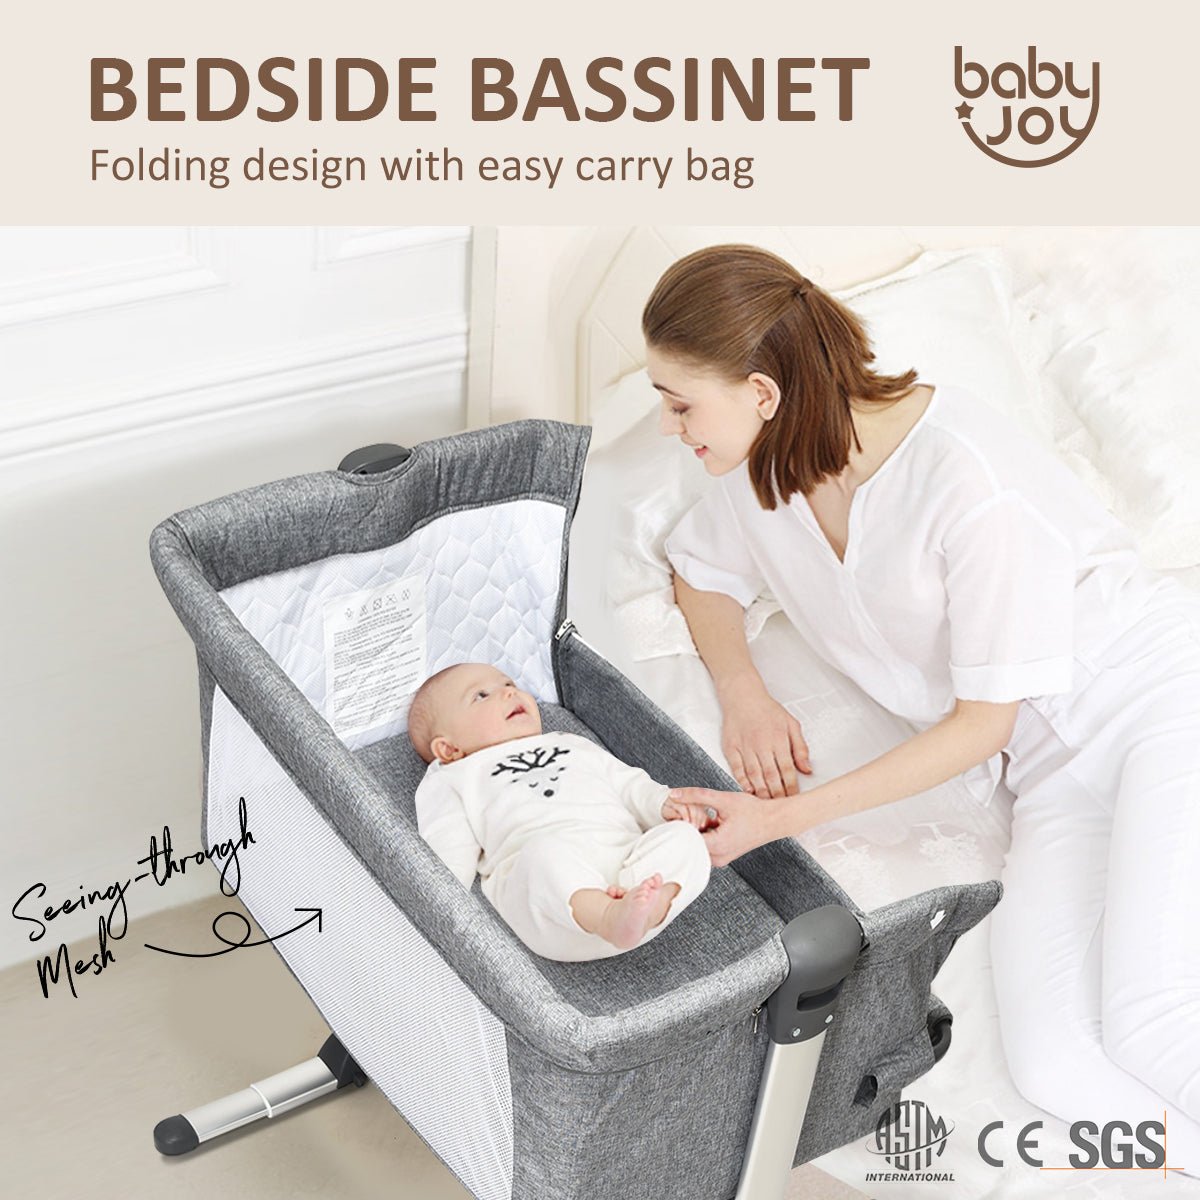 Modern Adjustable Height Baby Bassinet - Comfy Mattress & Portable Carry Bag